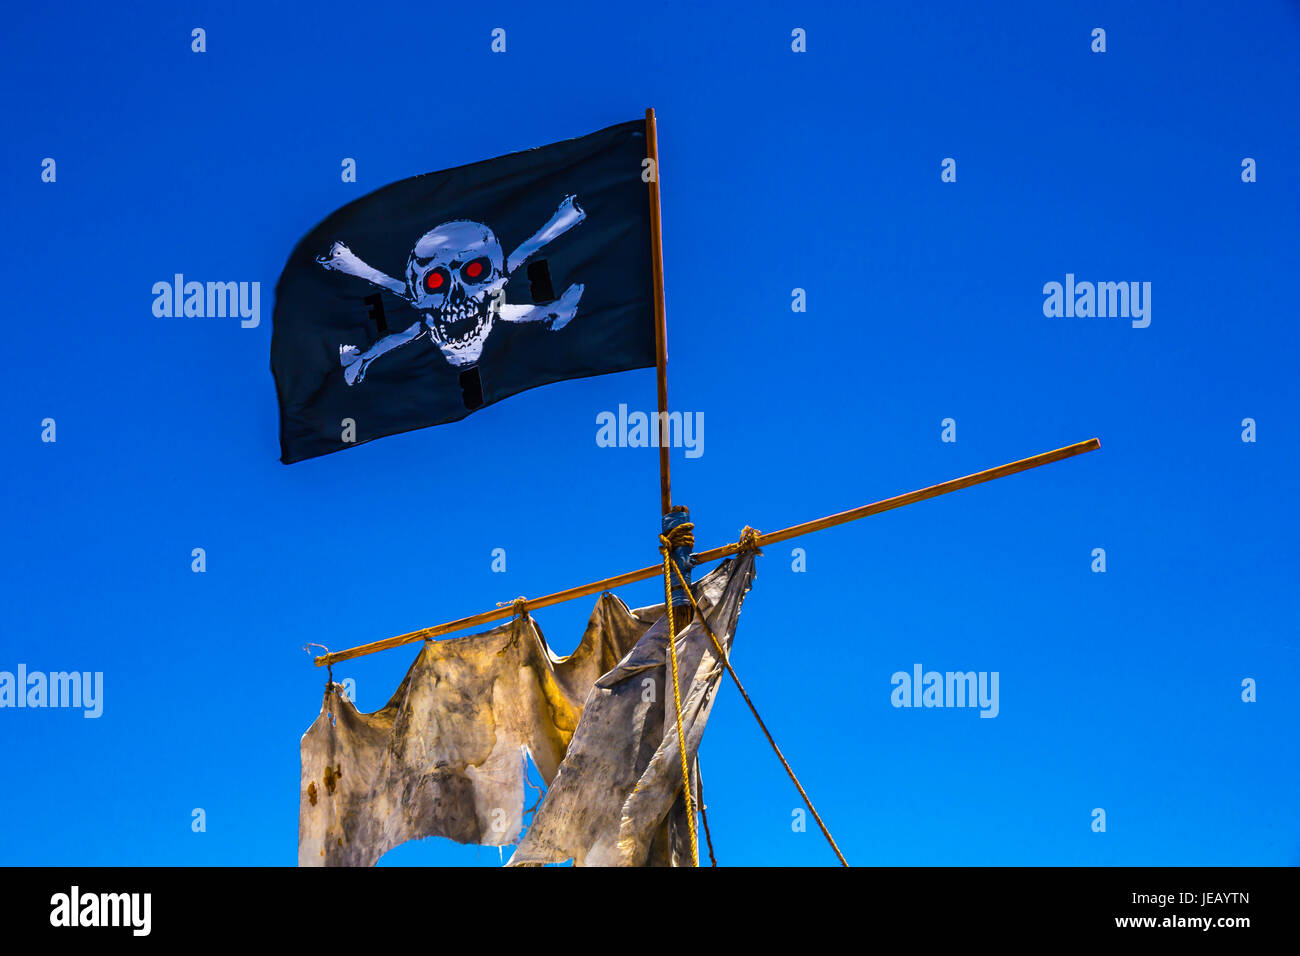 Pirate Flag On Mast Stock Photo